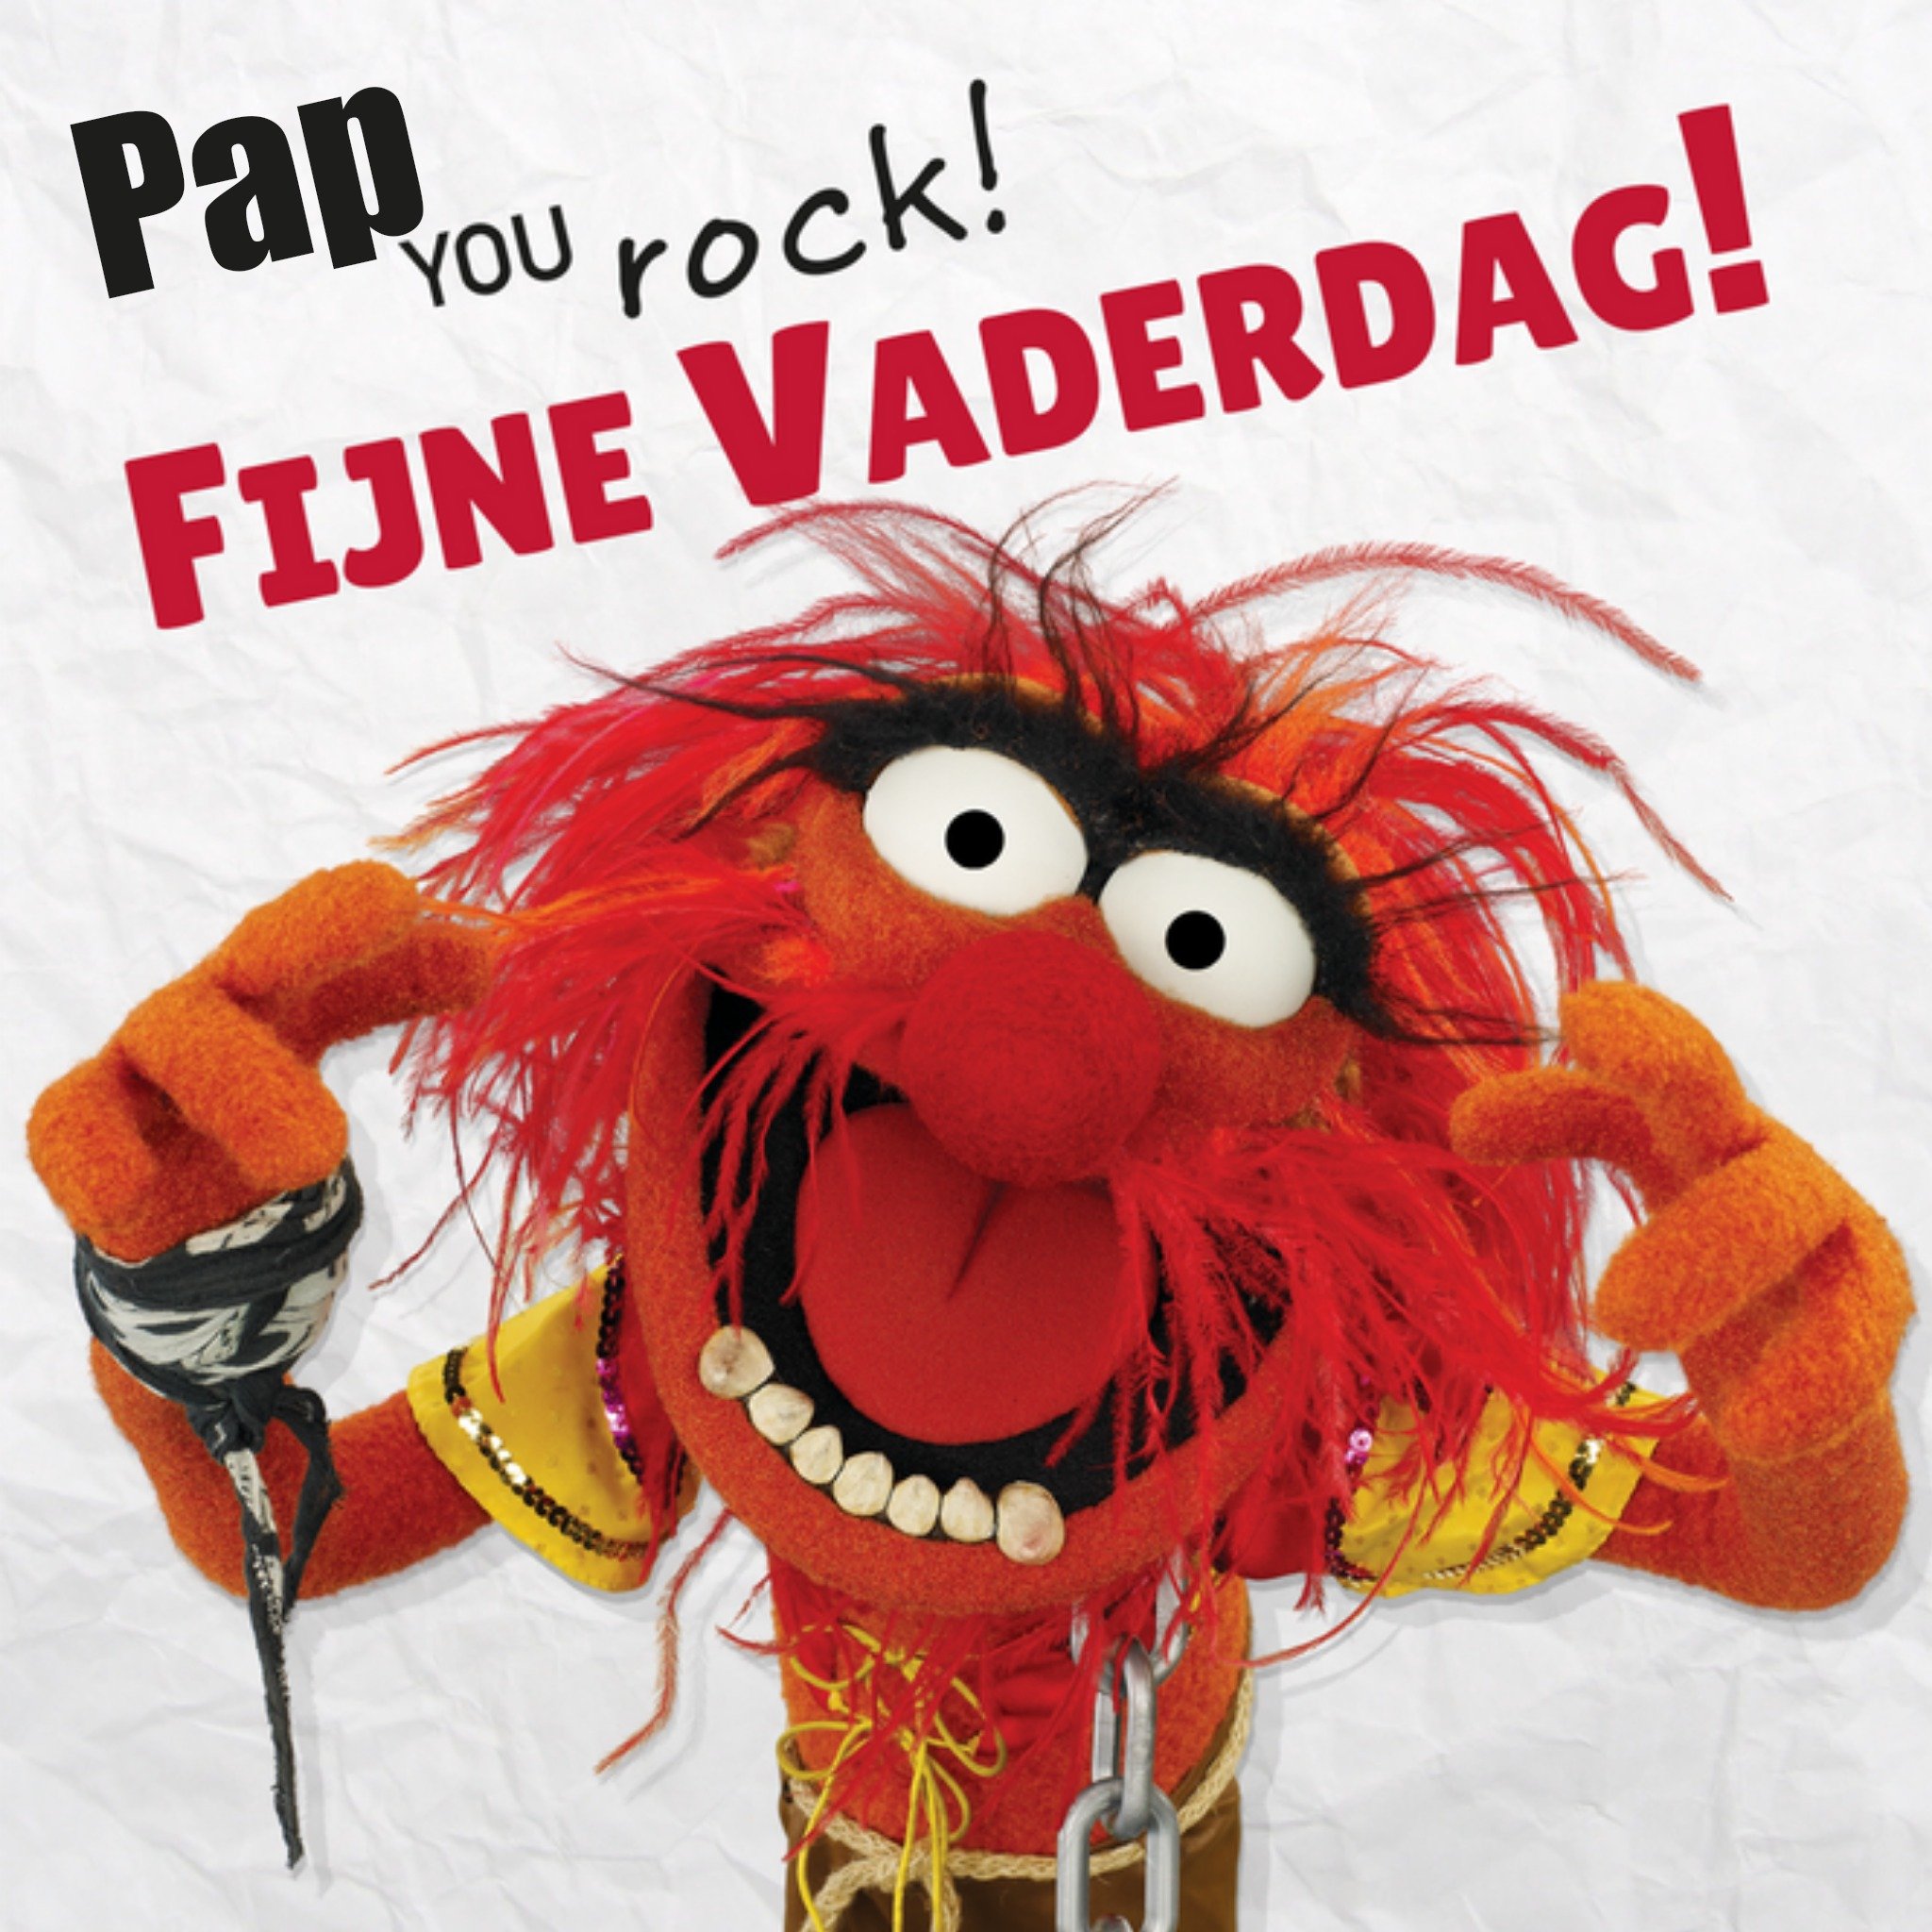 Muppets - Vaderdagkaart - You rock